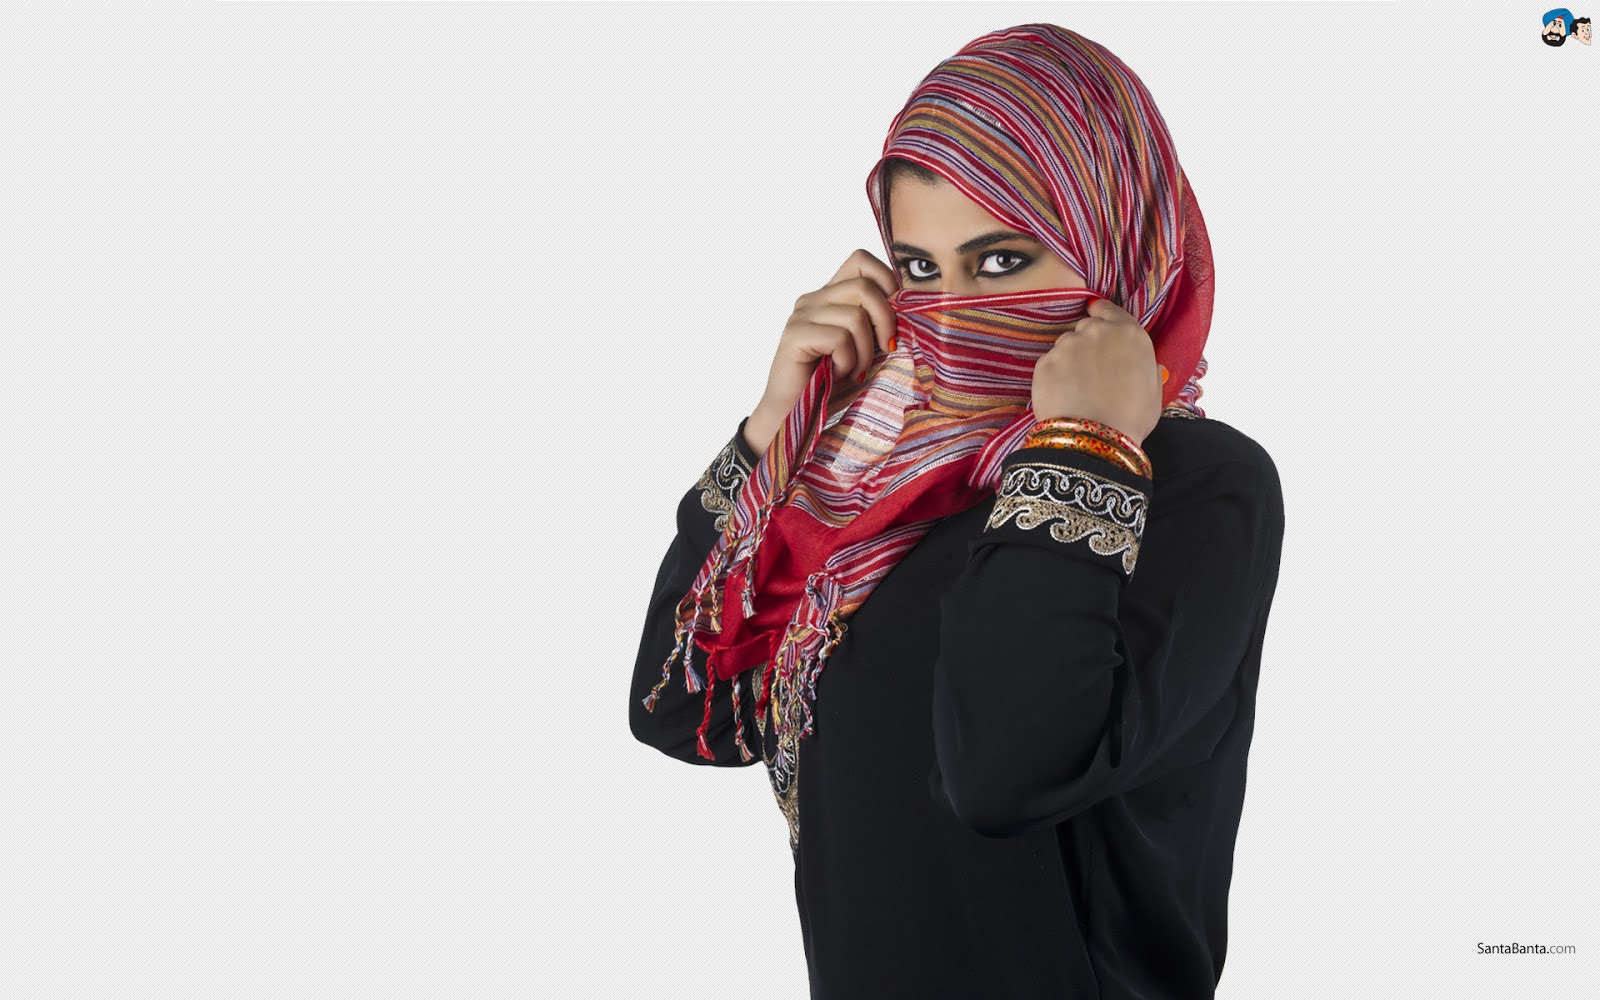 wallpaper wanita bercadar,scarf,clothing,red,turban,head